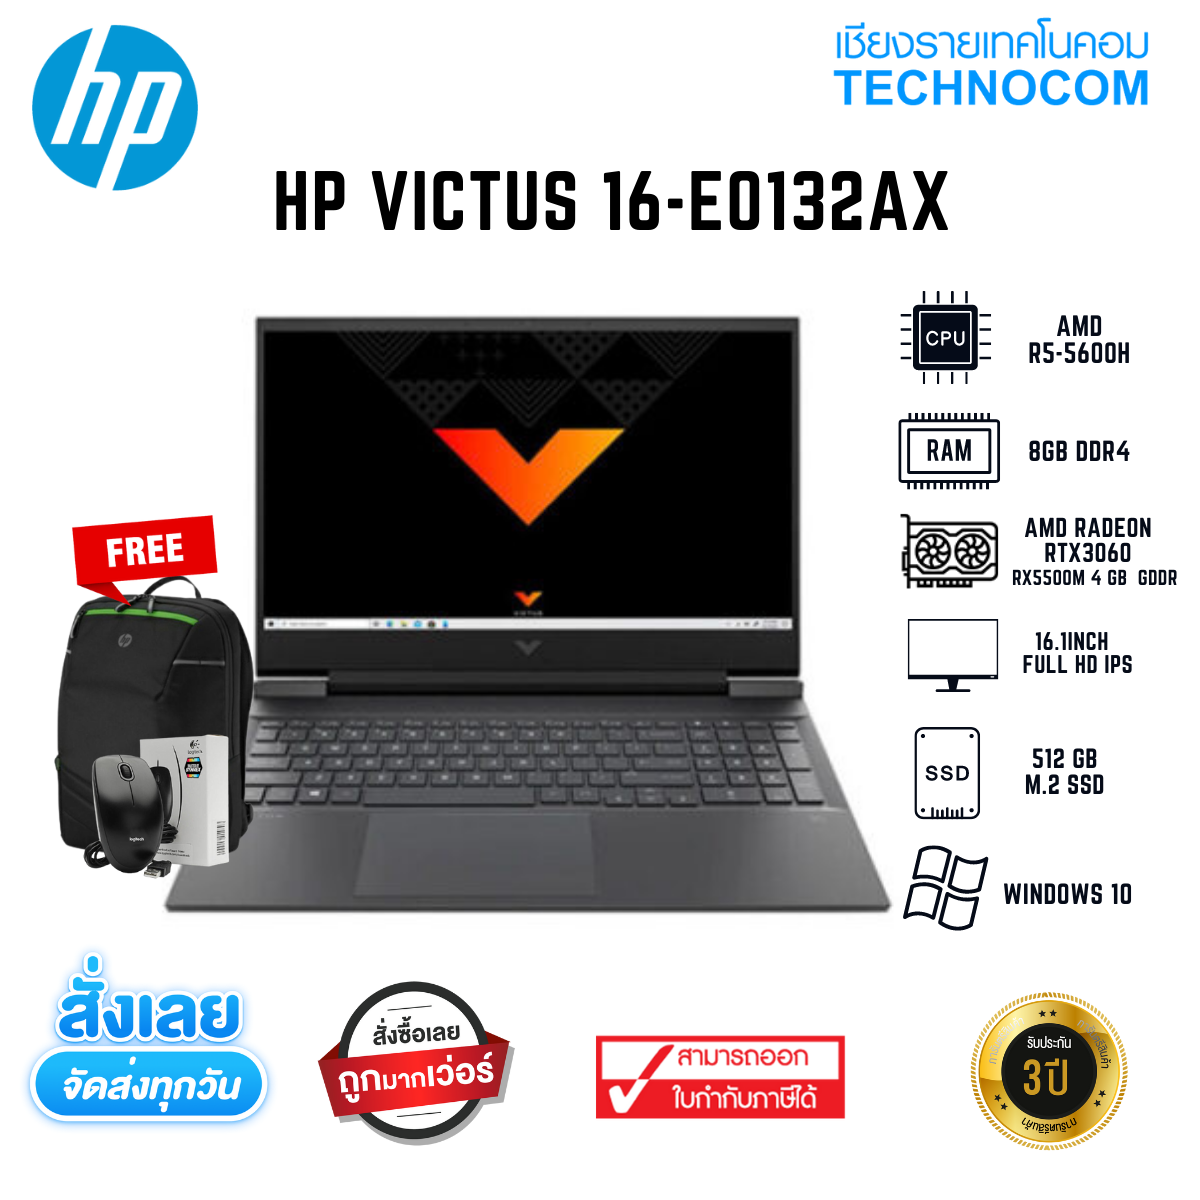 HP VICTUS 16-E0132AX AMD R5-5600H/8GB DDR4/512GB M.2 SSD